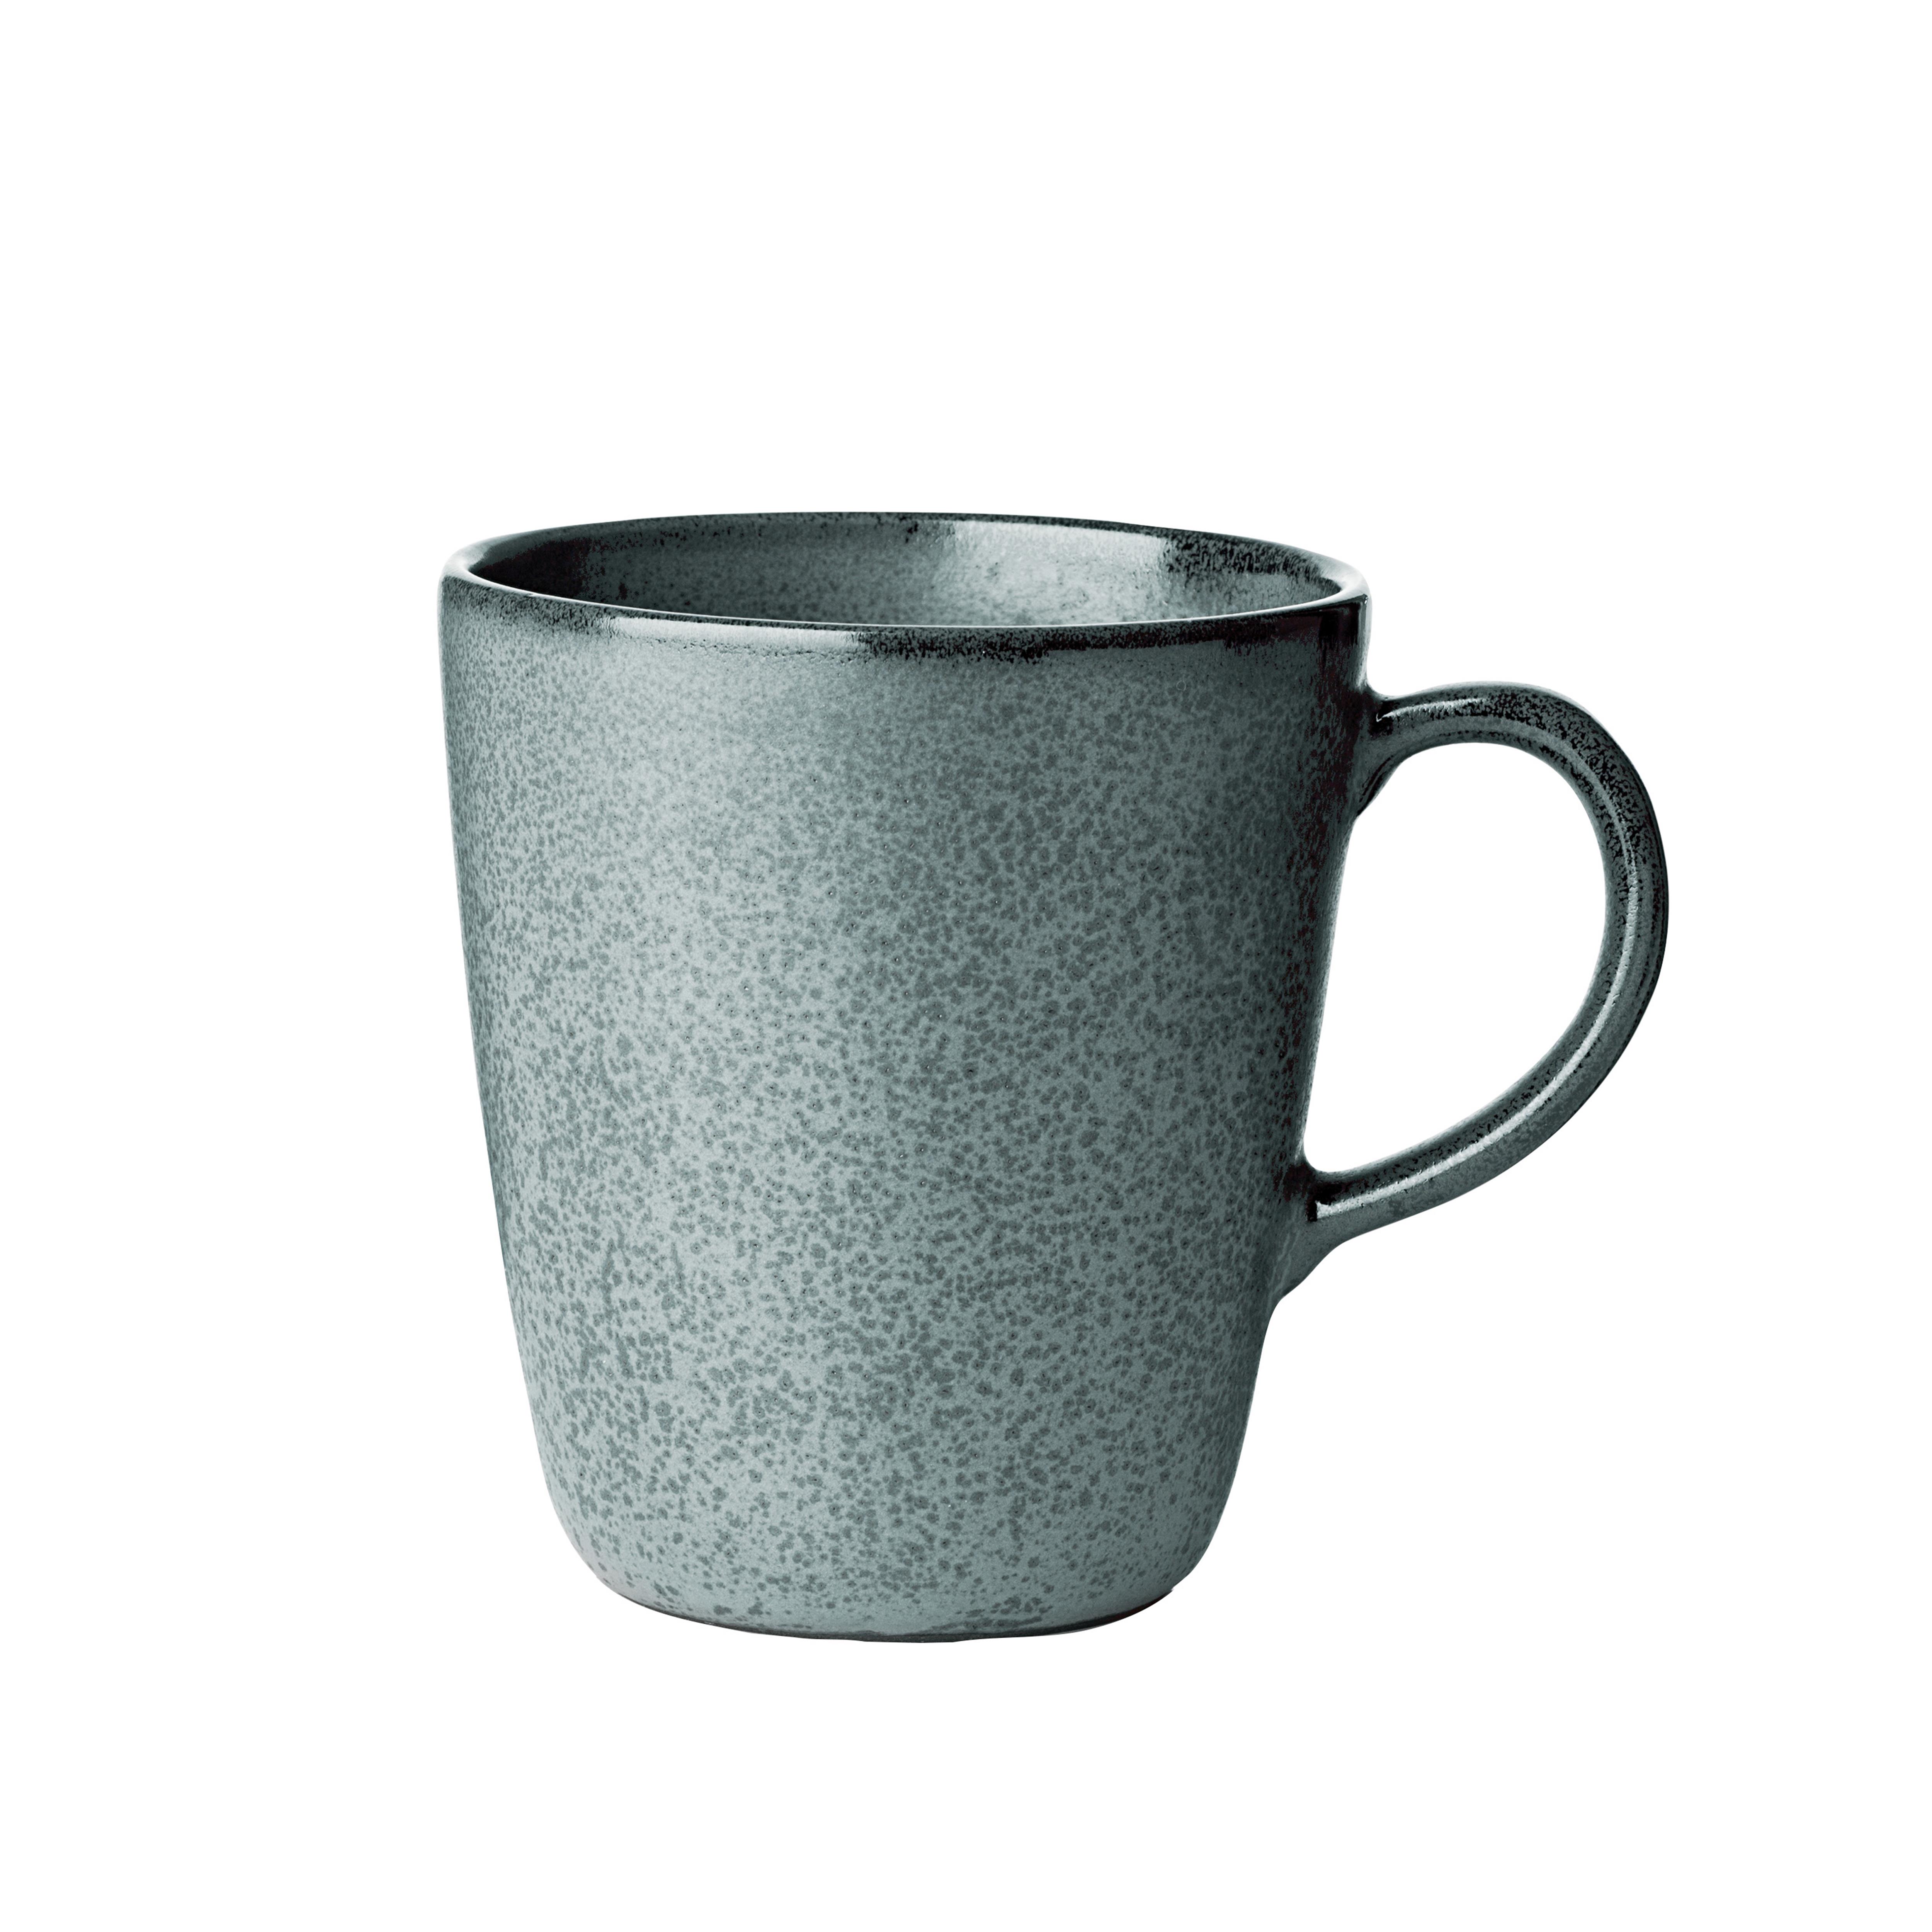 Raw mug with handle 35 cl from Aida